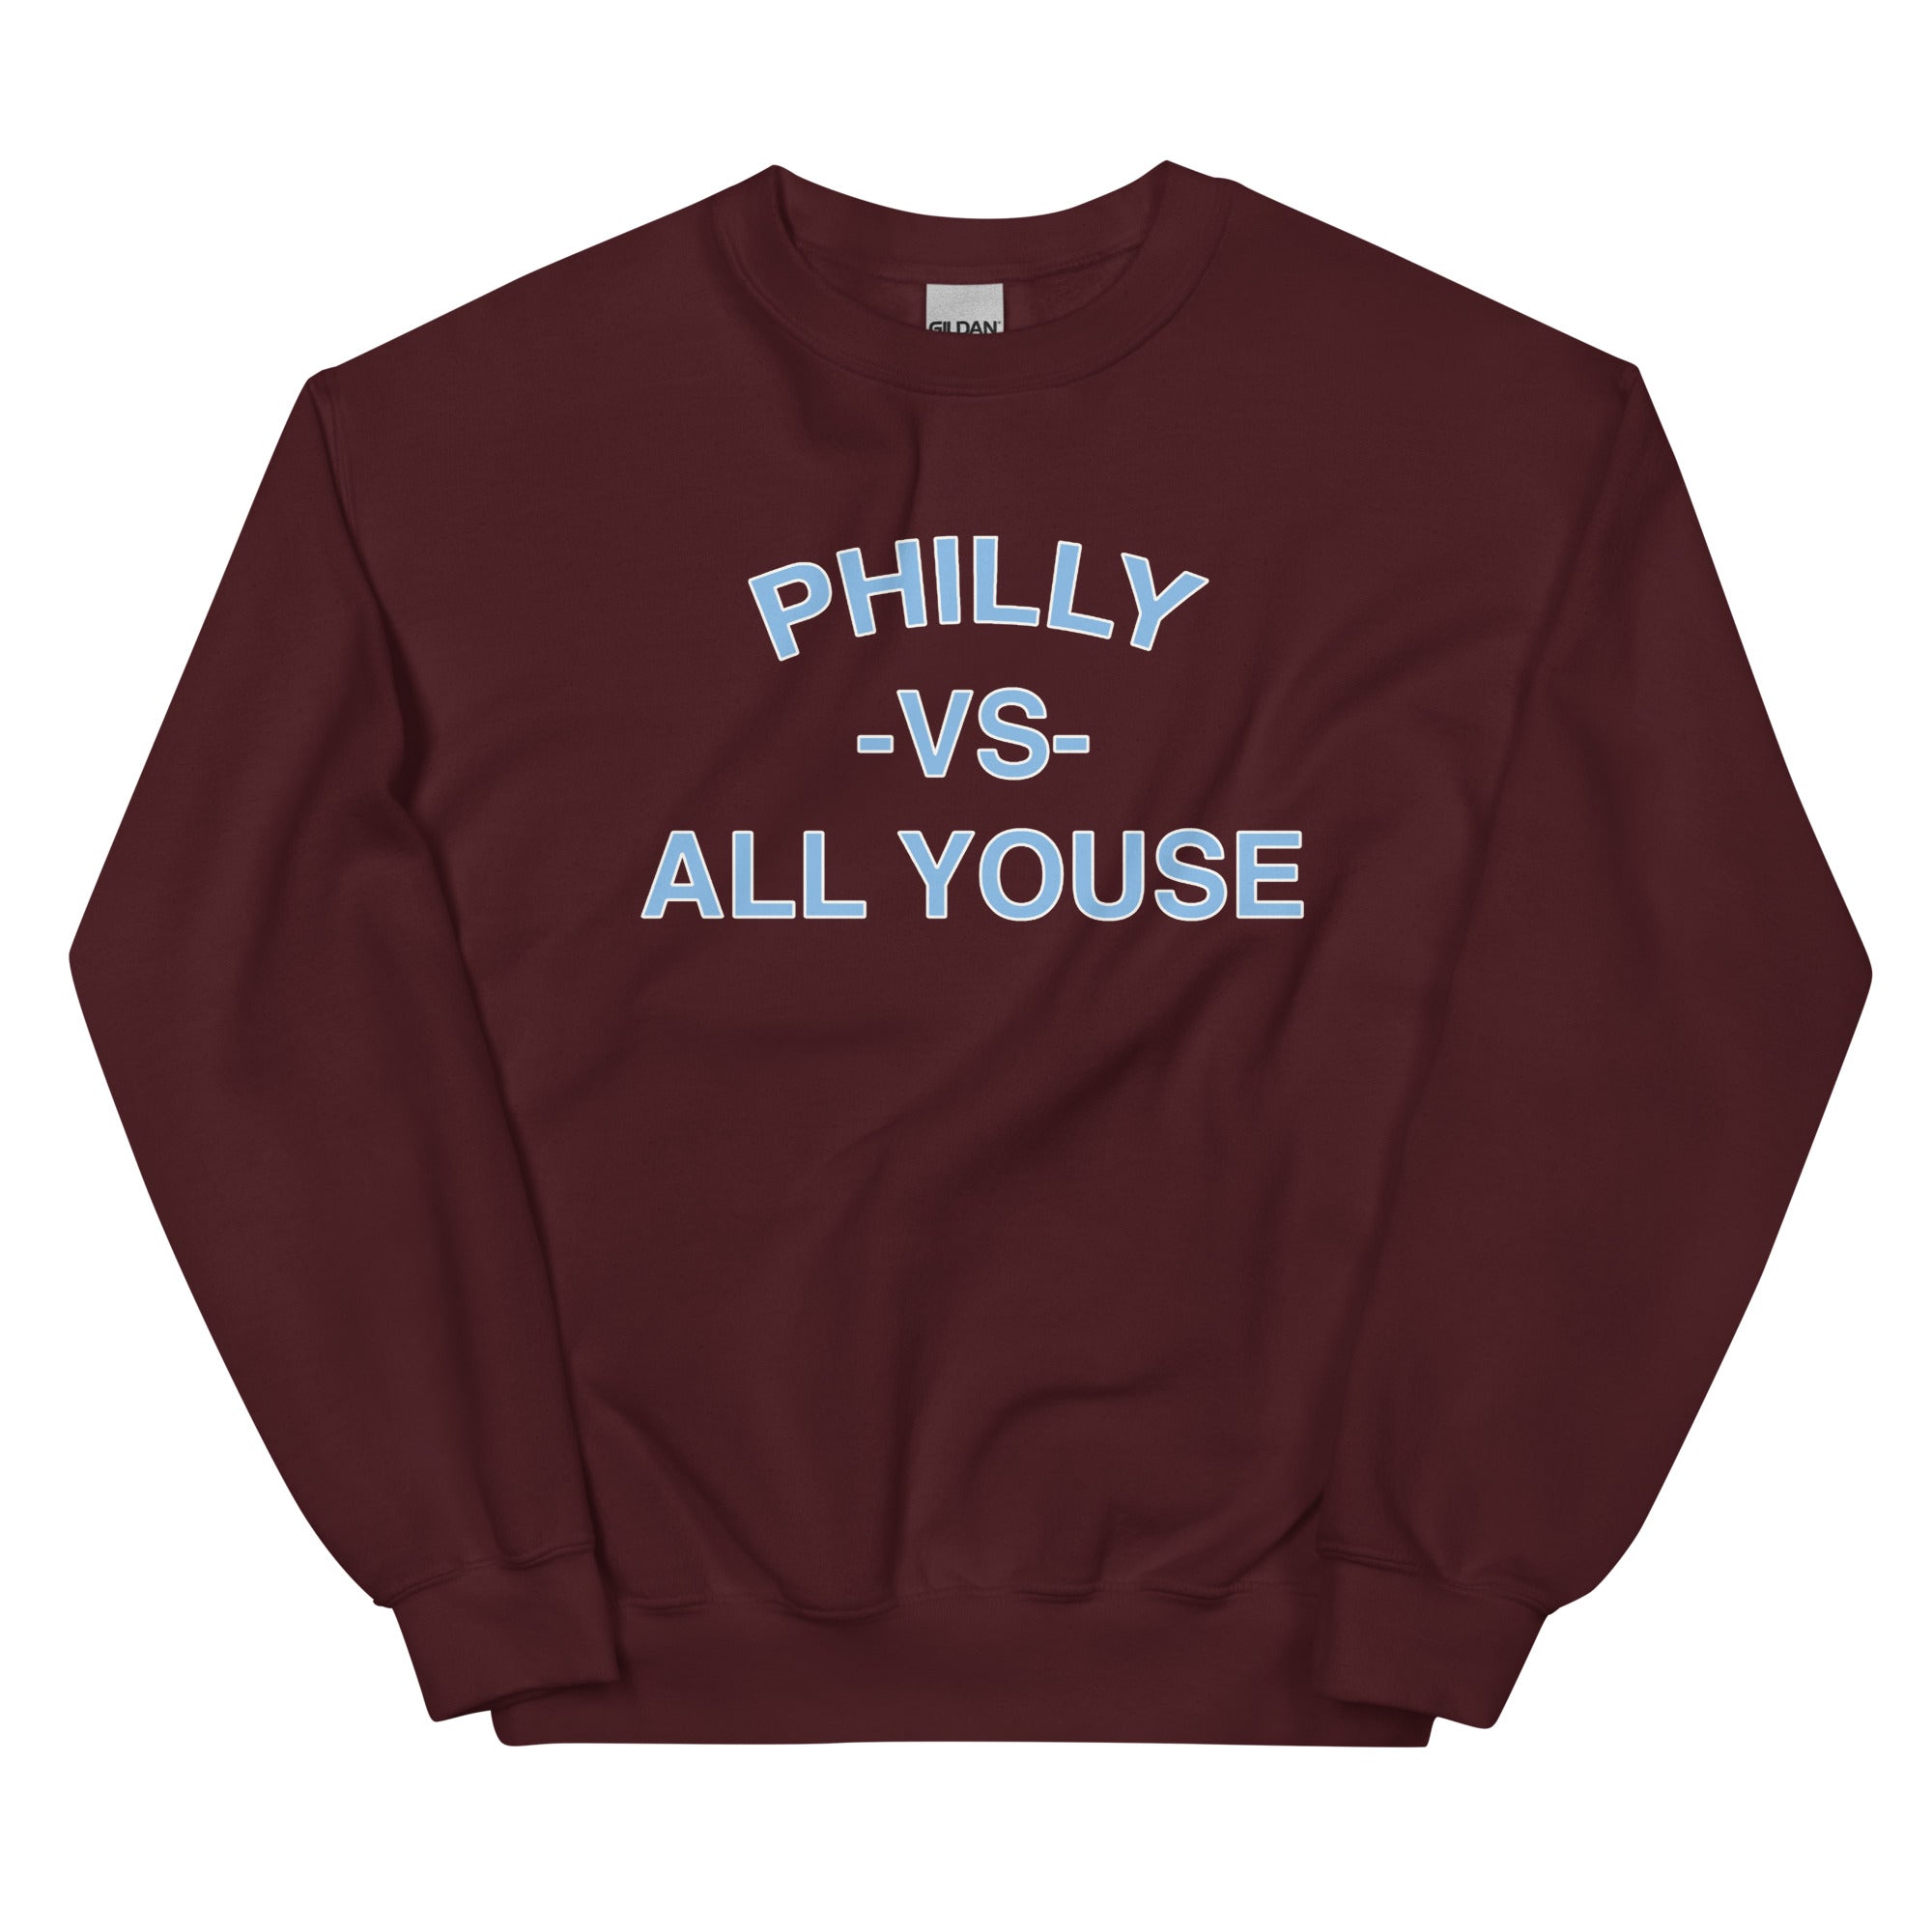 Philadelphia vs everybody philly vs all youse maroon sweatshirt Phillygoat